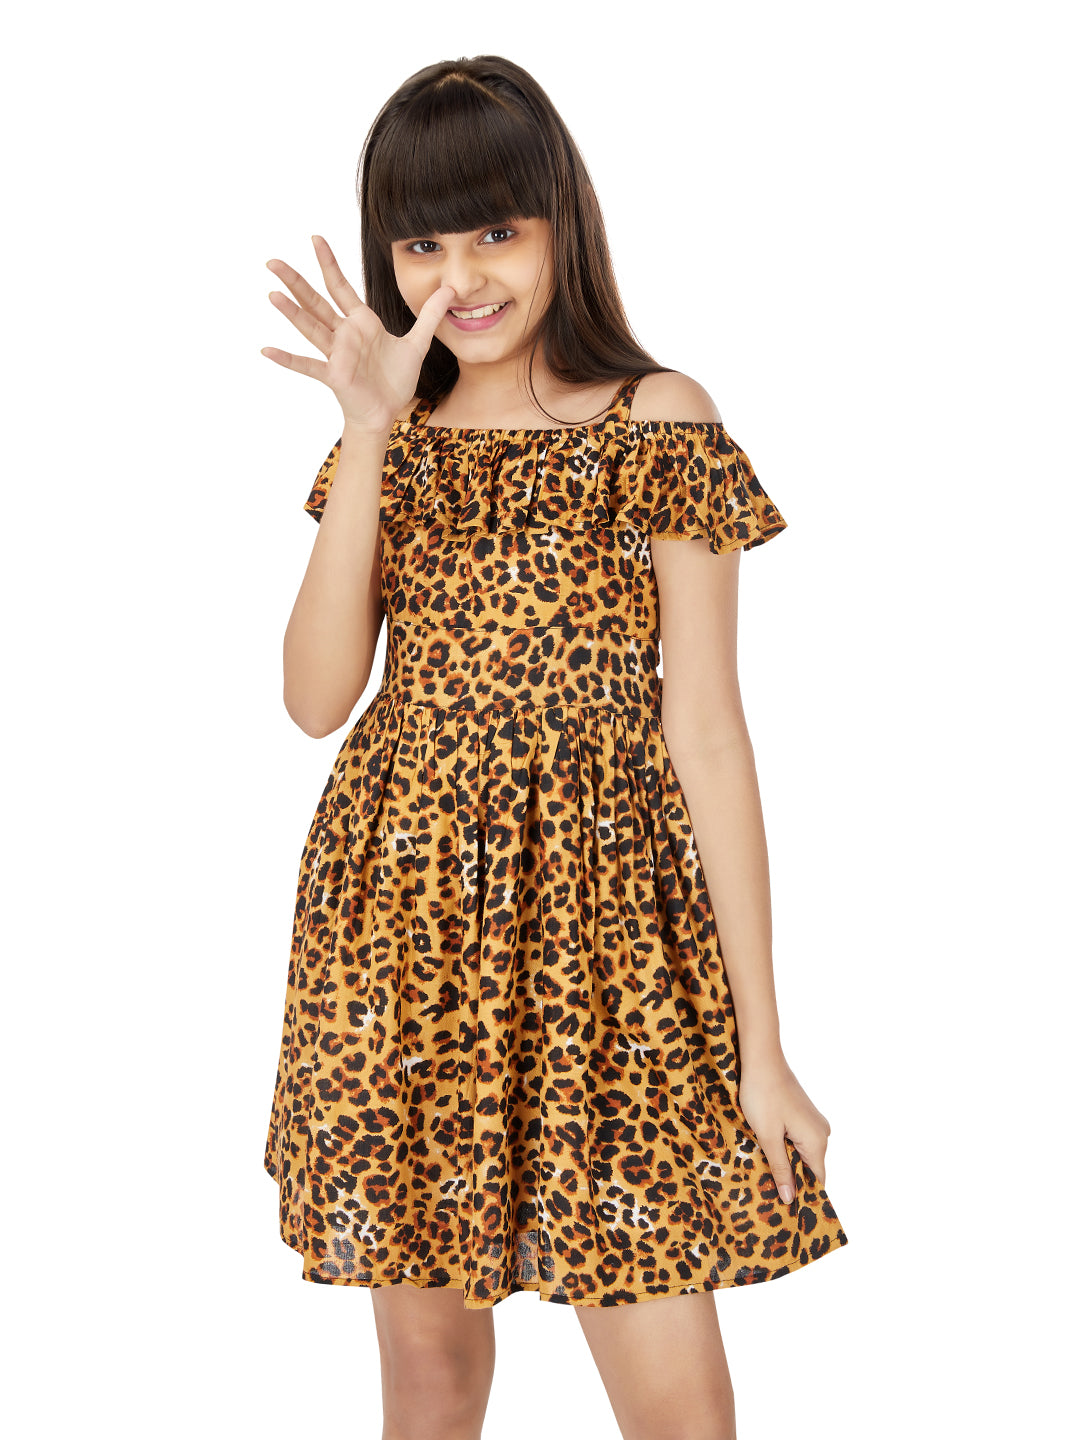 Olele® Girls Leopard Print Dress